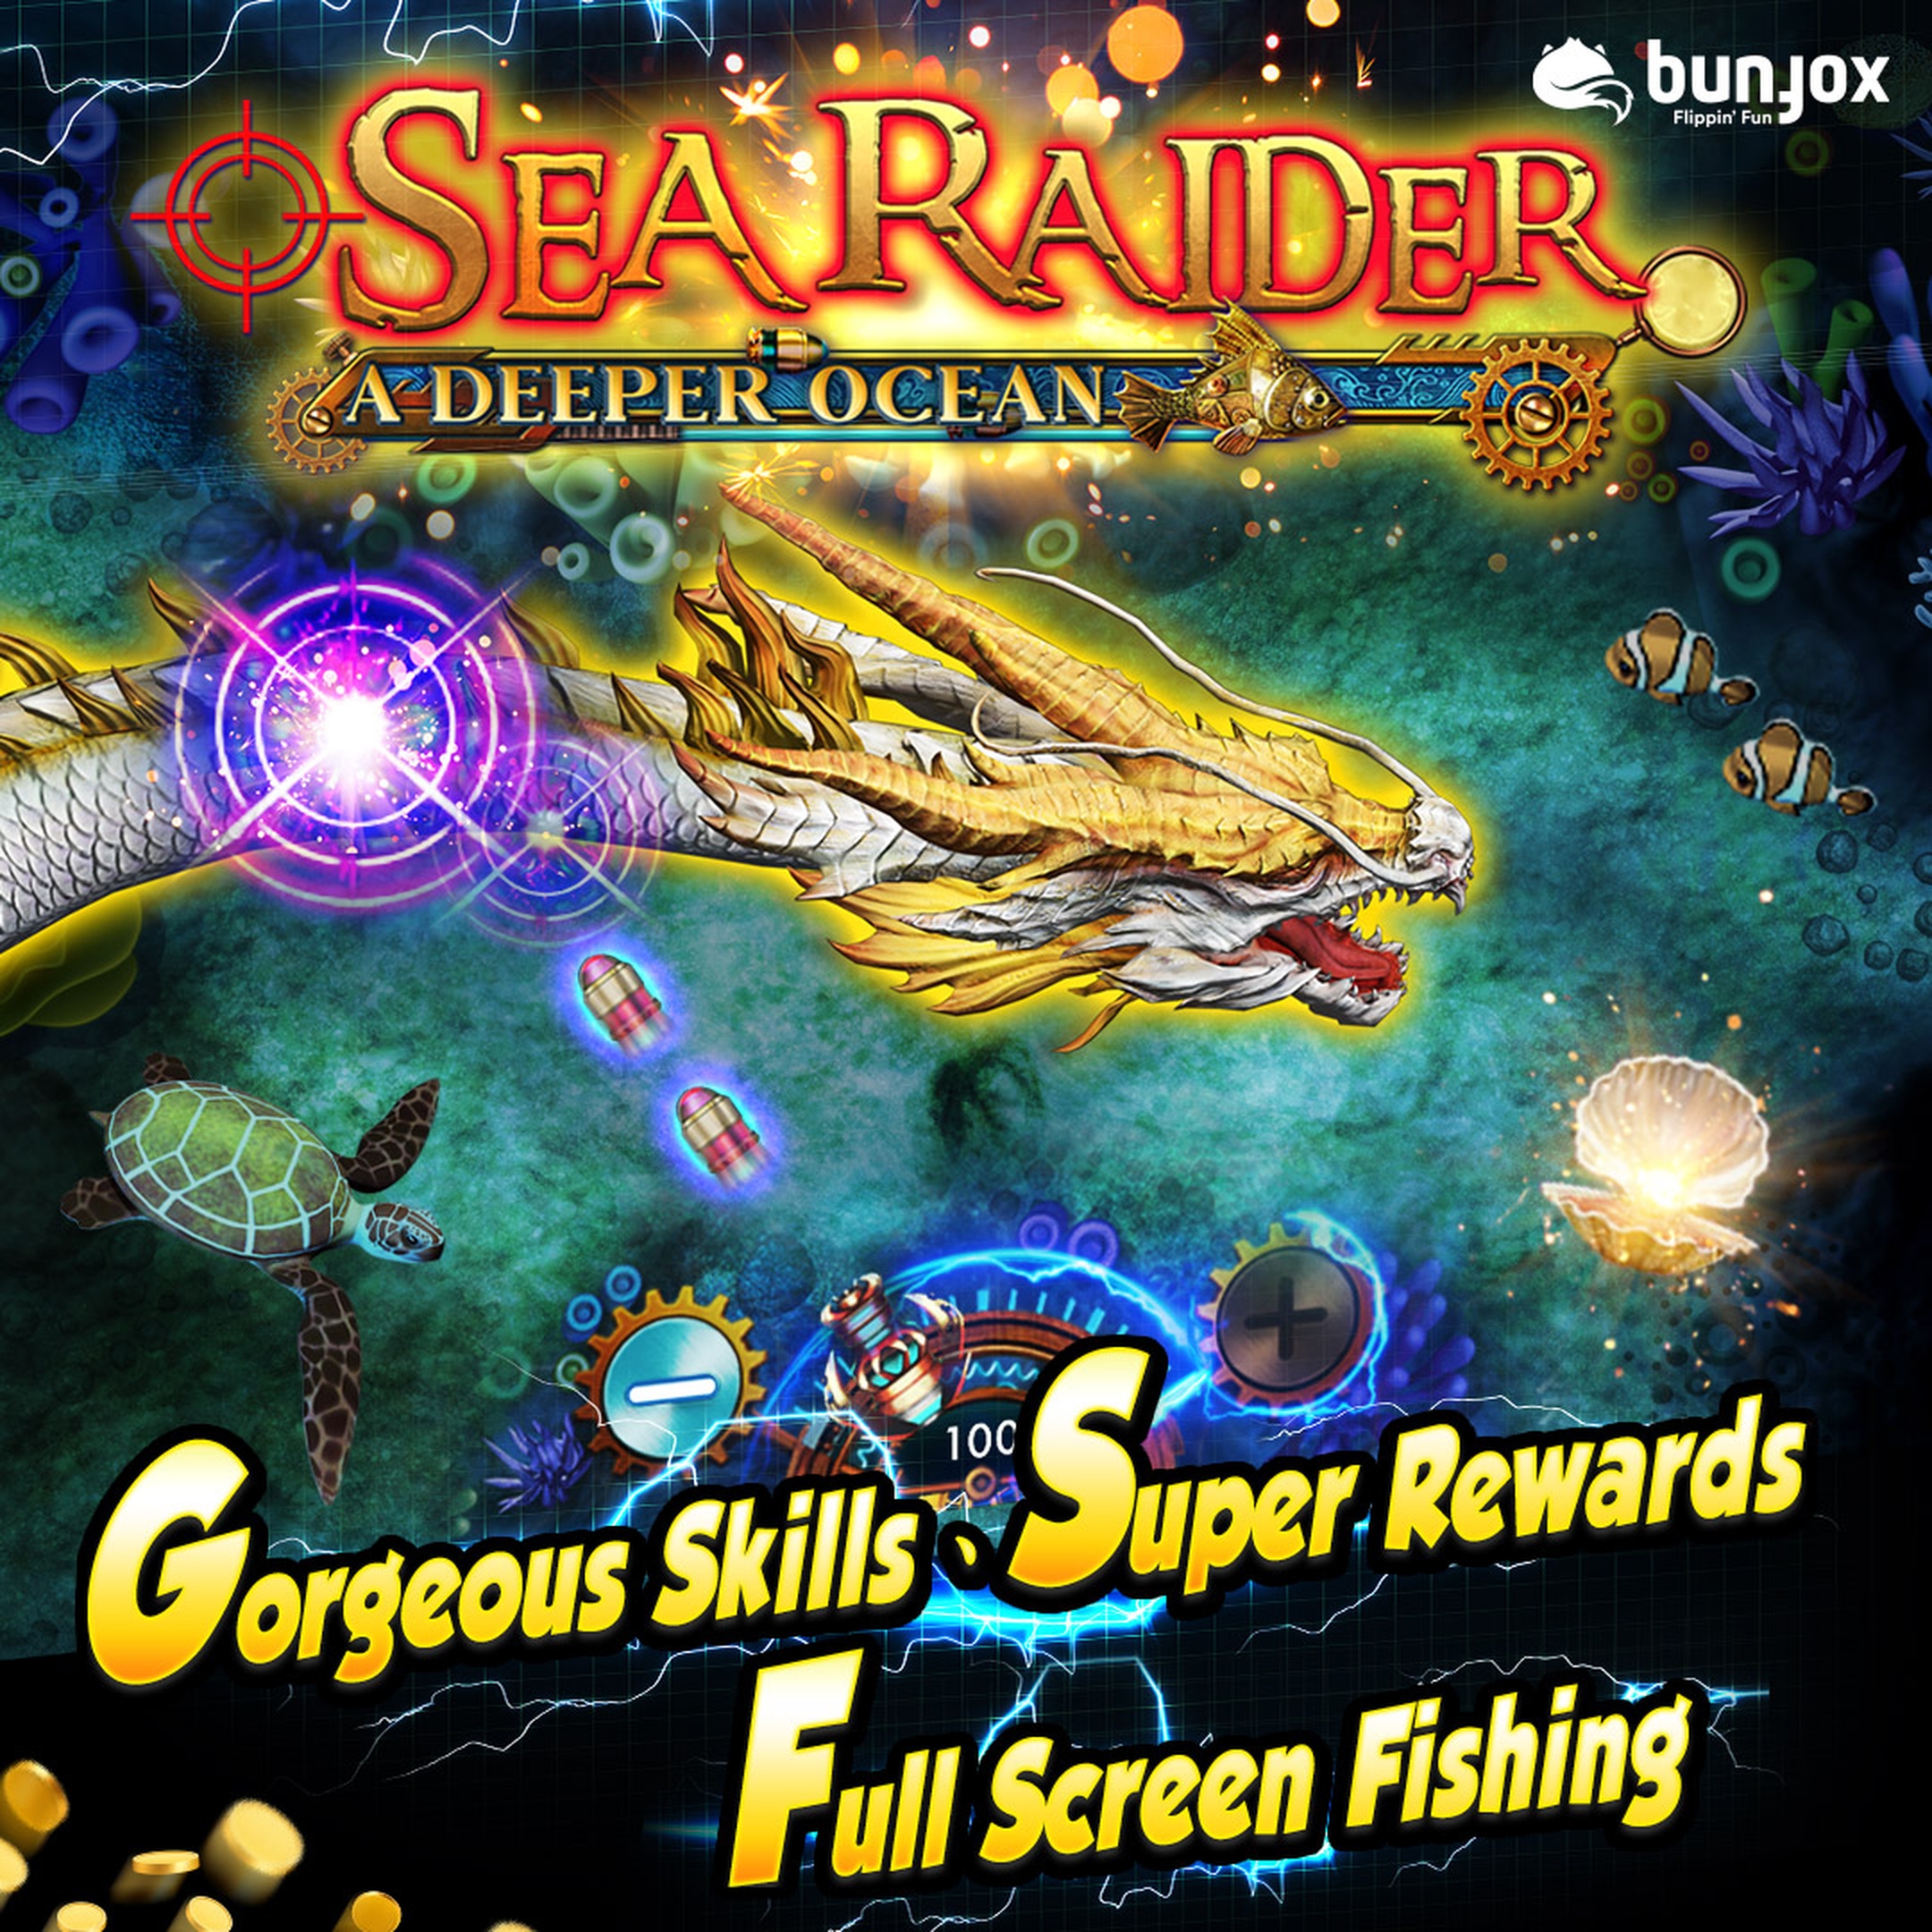 The Sea Raider Online Slot Demo Game by Bunfox Games